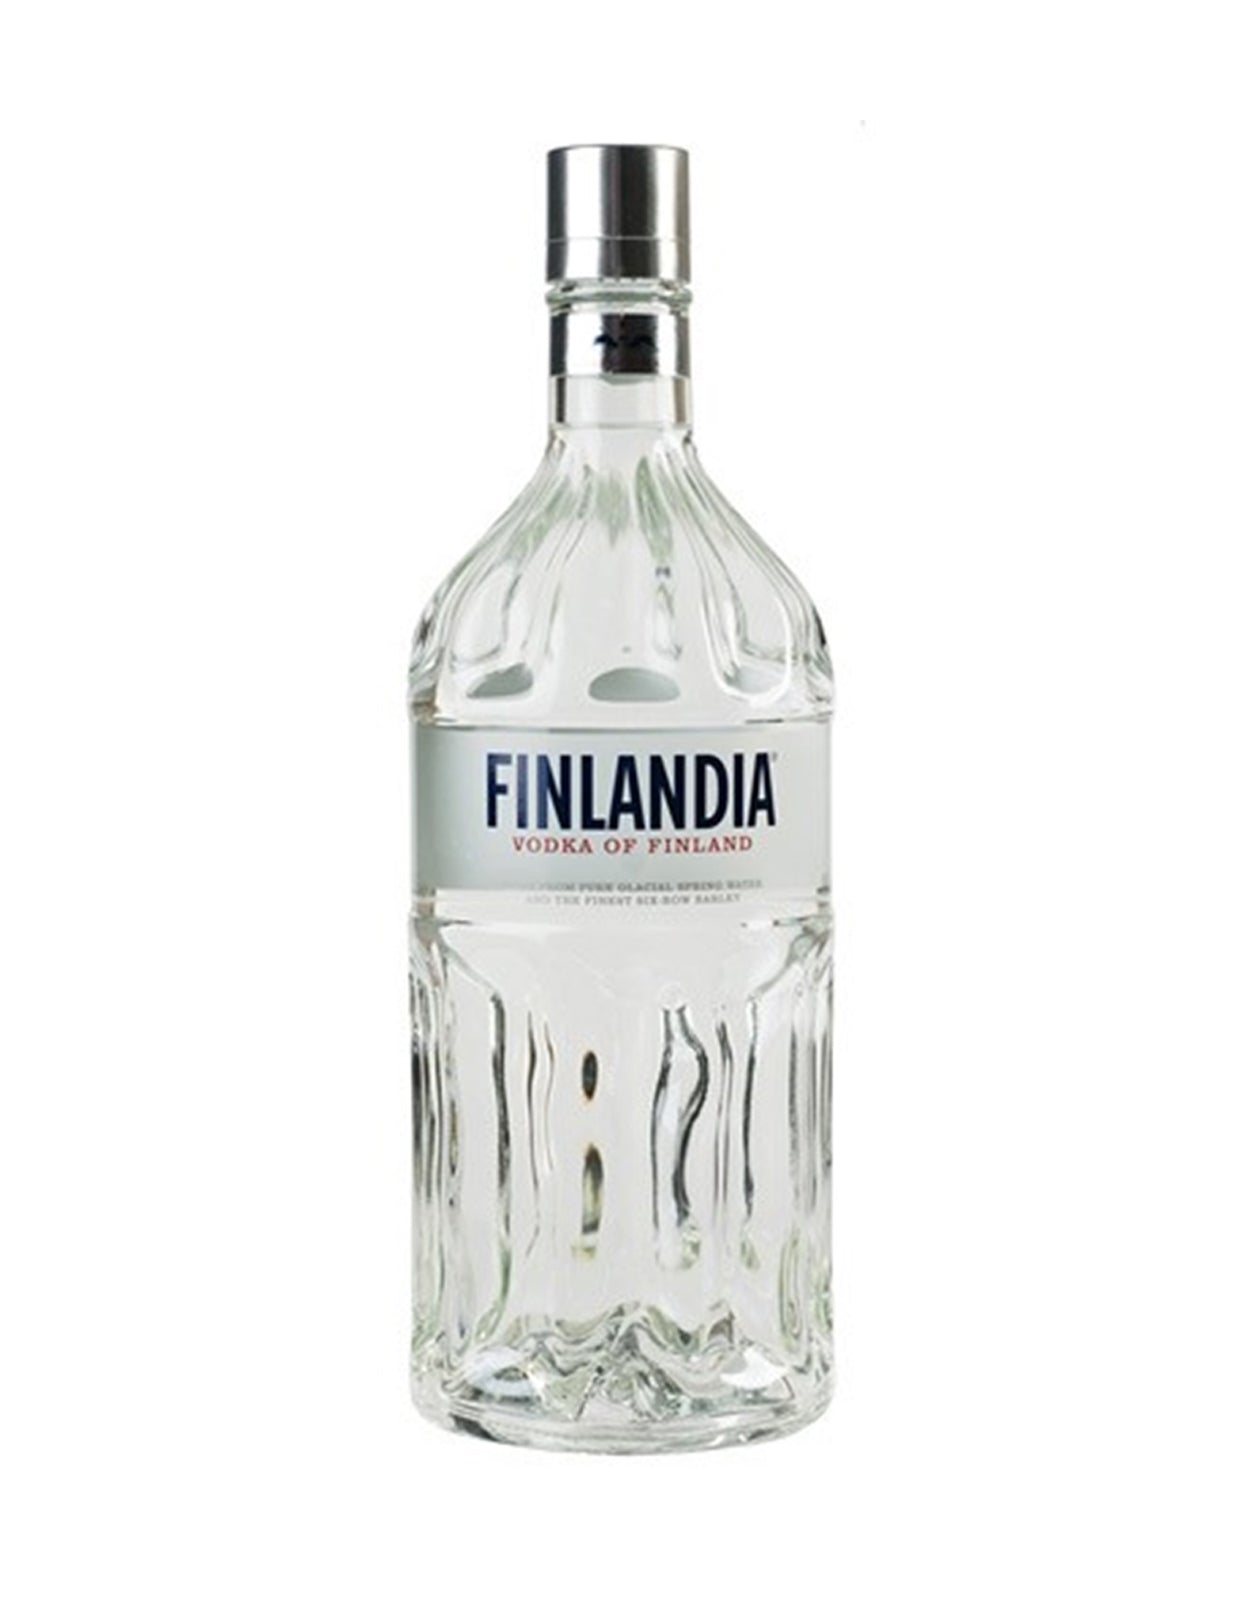 Finlandia Vodka - 1.75 Litre Bottle